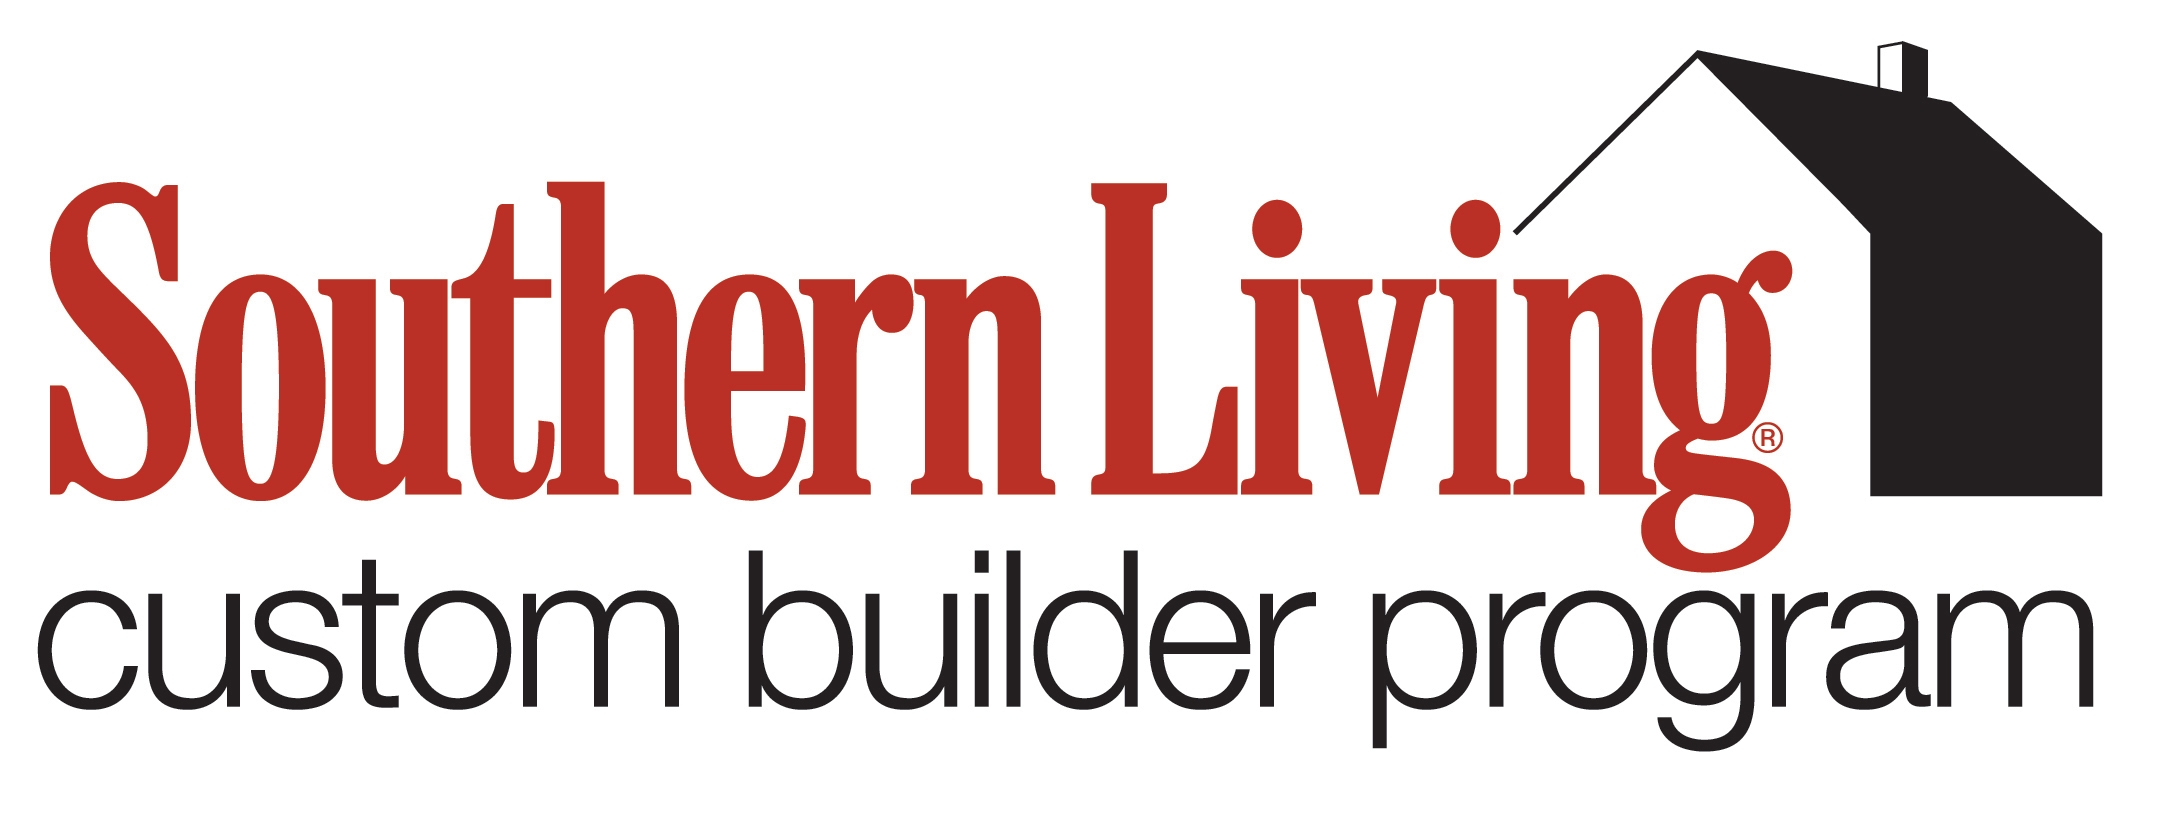 Southern Living Logo